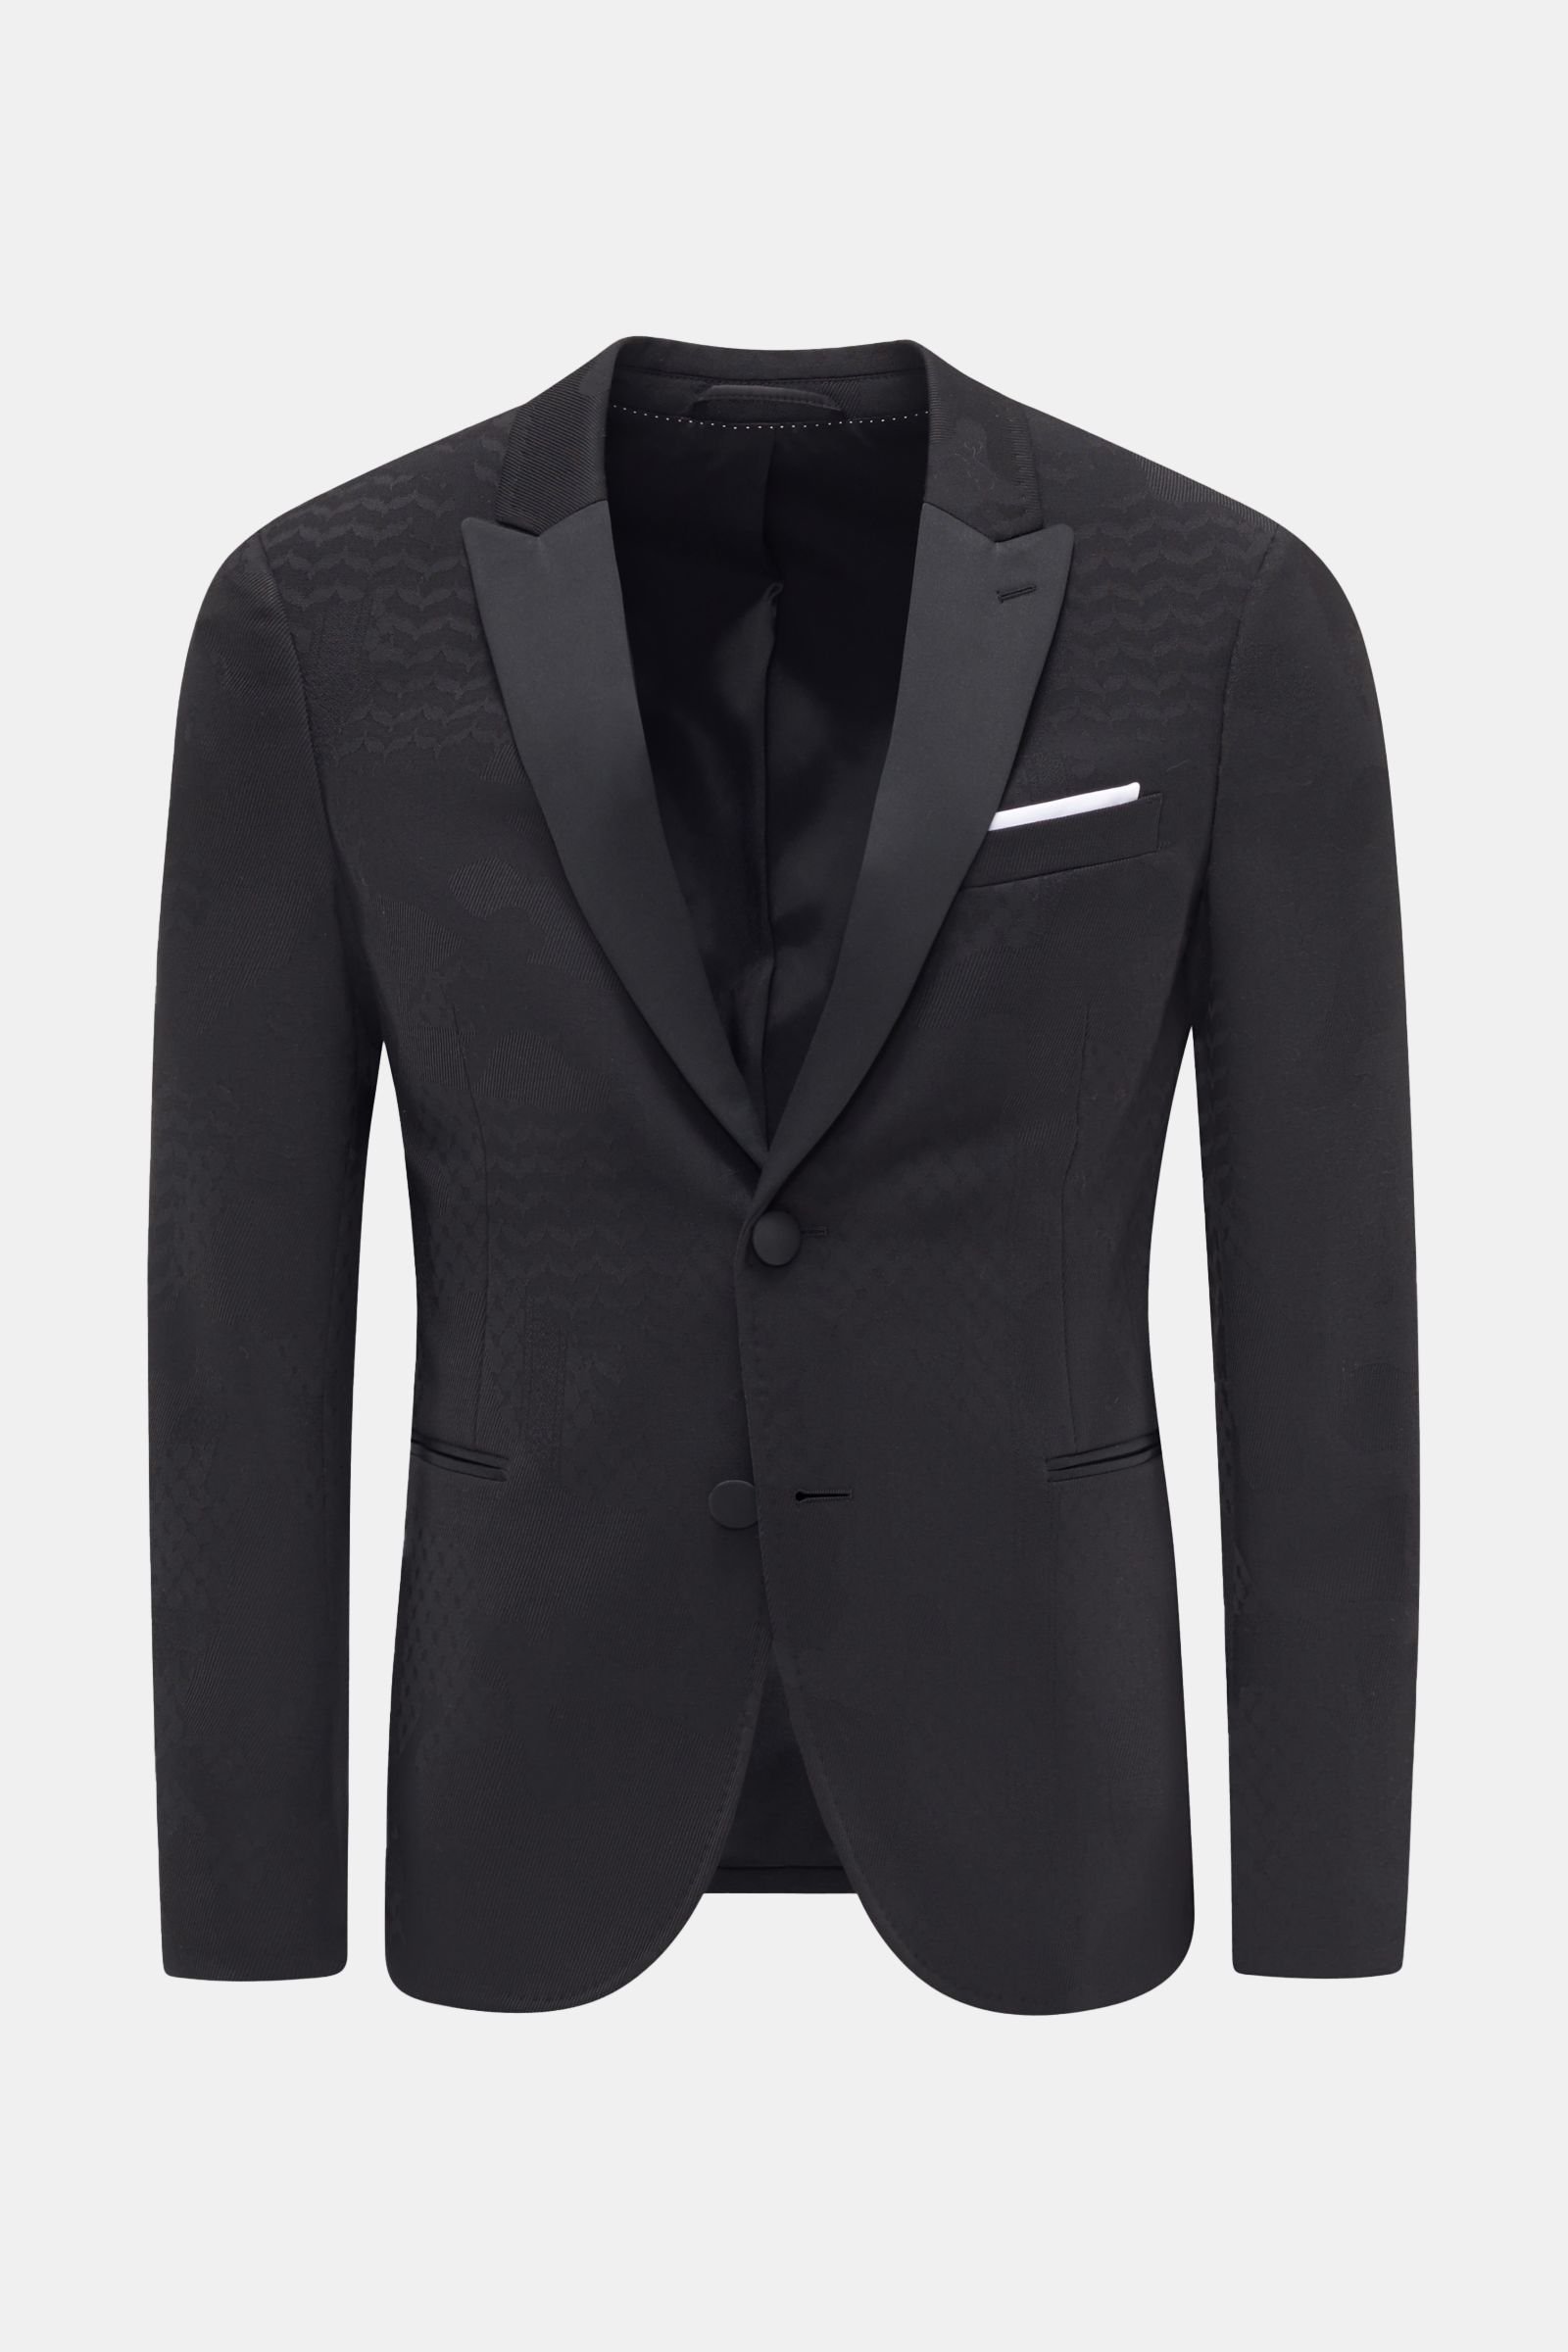 Smart-casual jacket black patterned